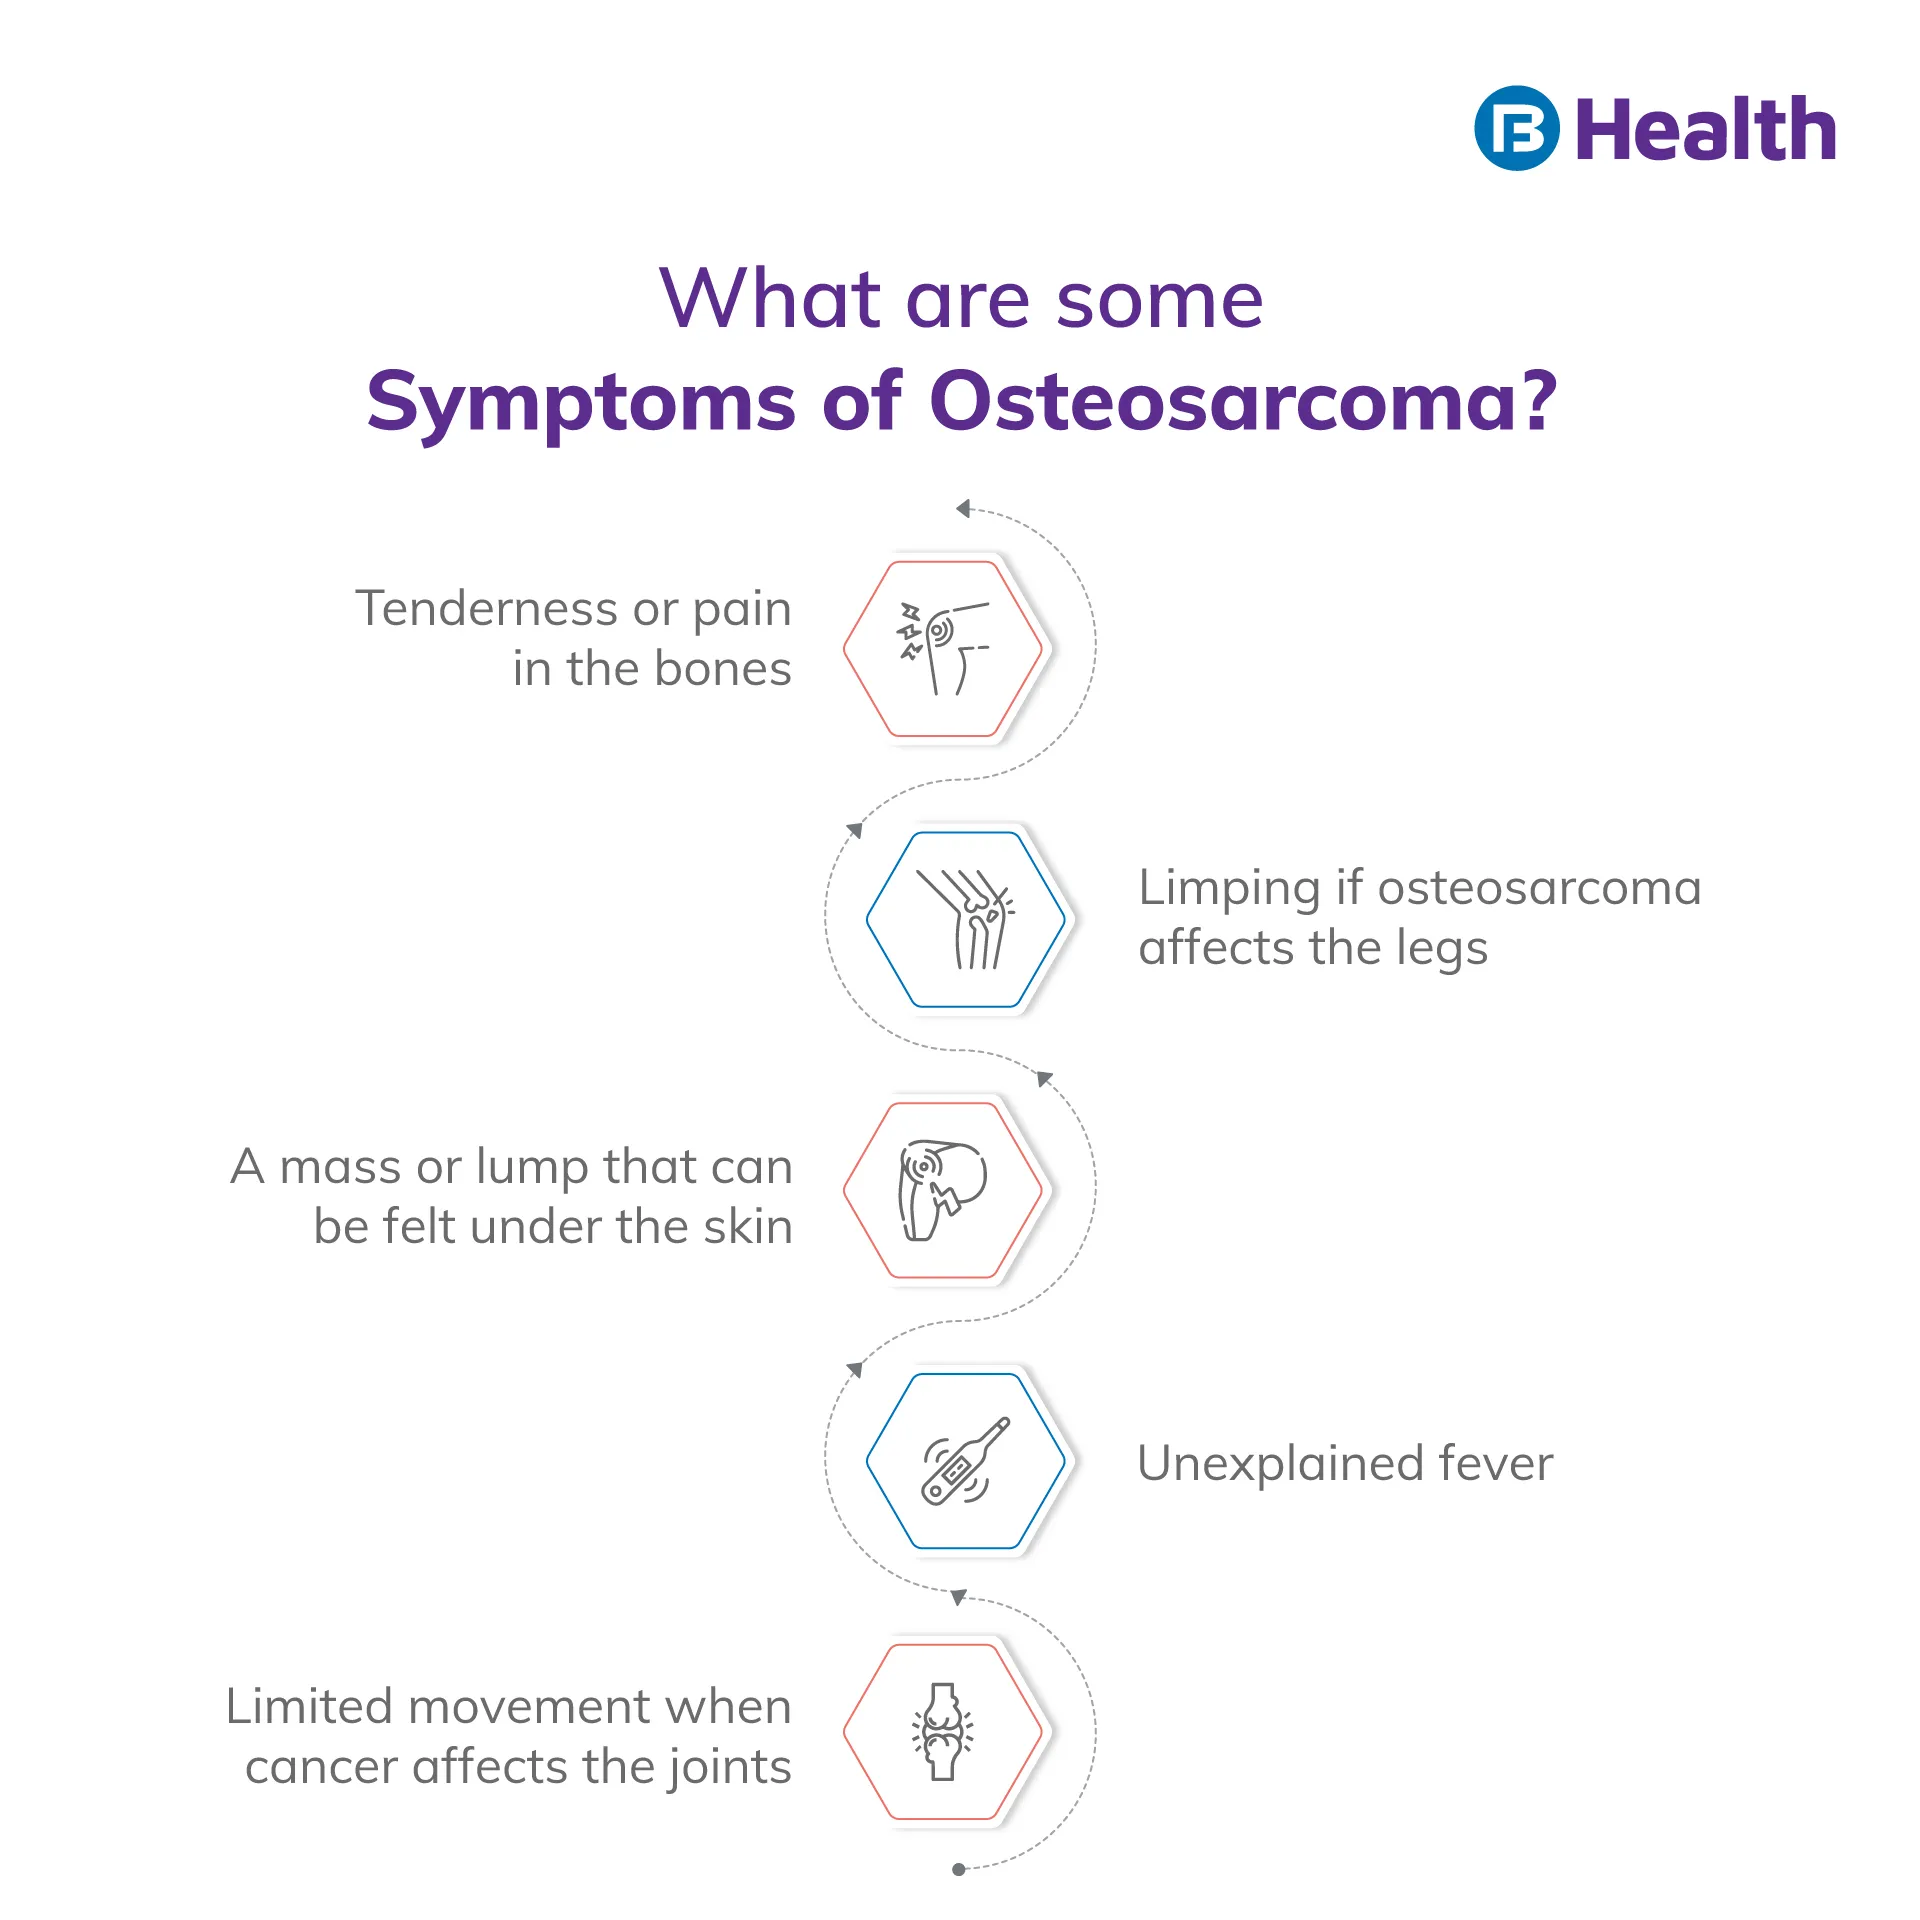 Symptoms of Osteosarcoma